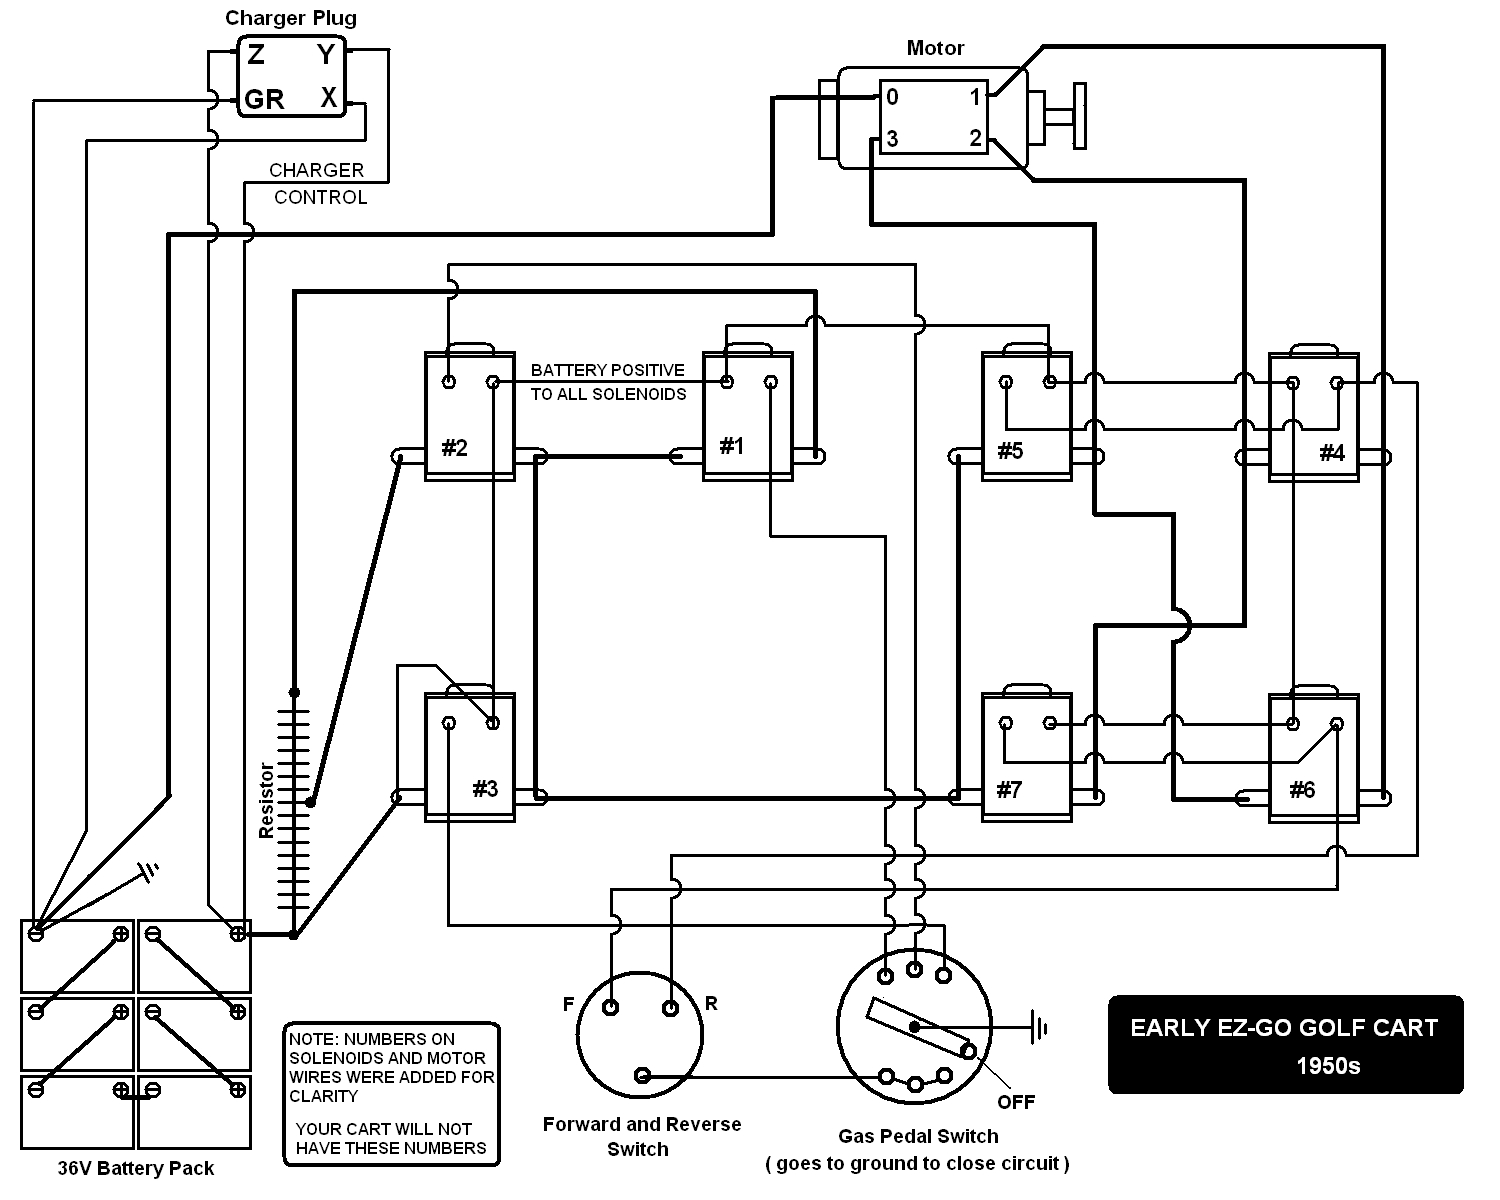 Melex 412 Golf Cart Wiring Diagram melex 412 wiring diagram 